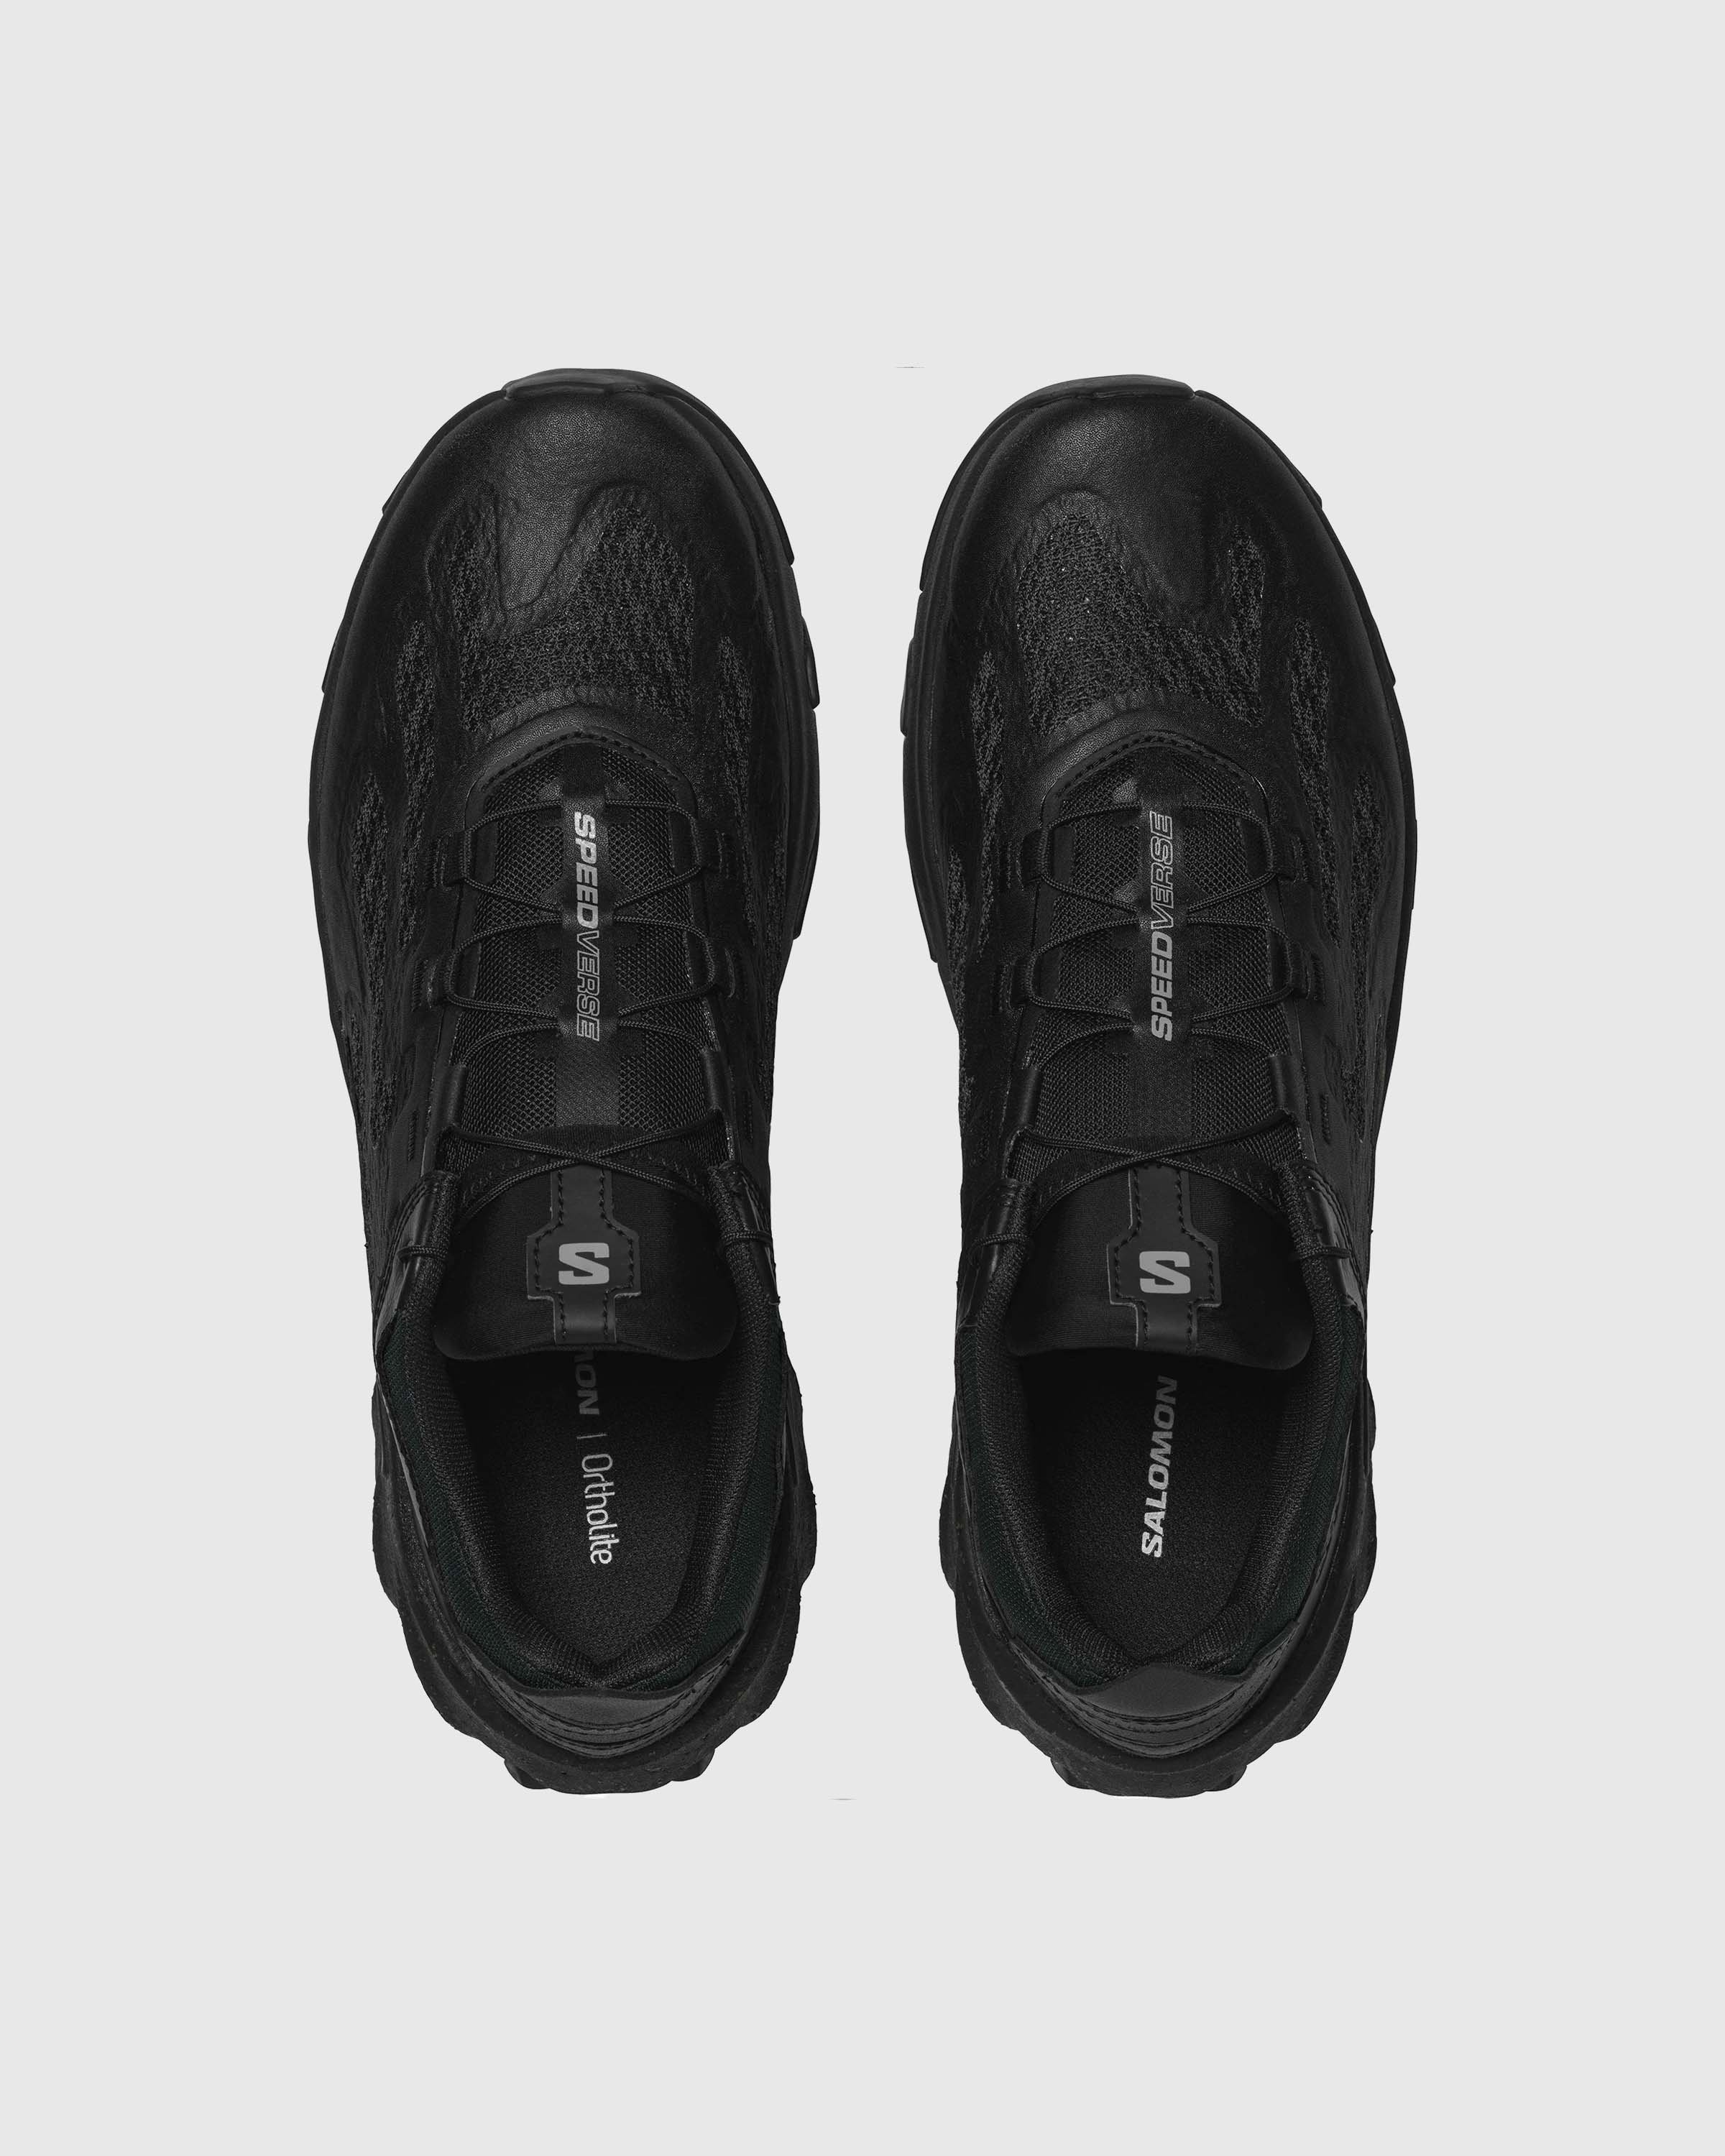 Salomon – Speedverse PRG Black/Alloy/Black - Sneakers - Black - Image 4